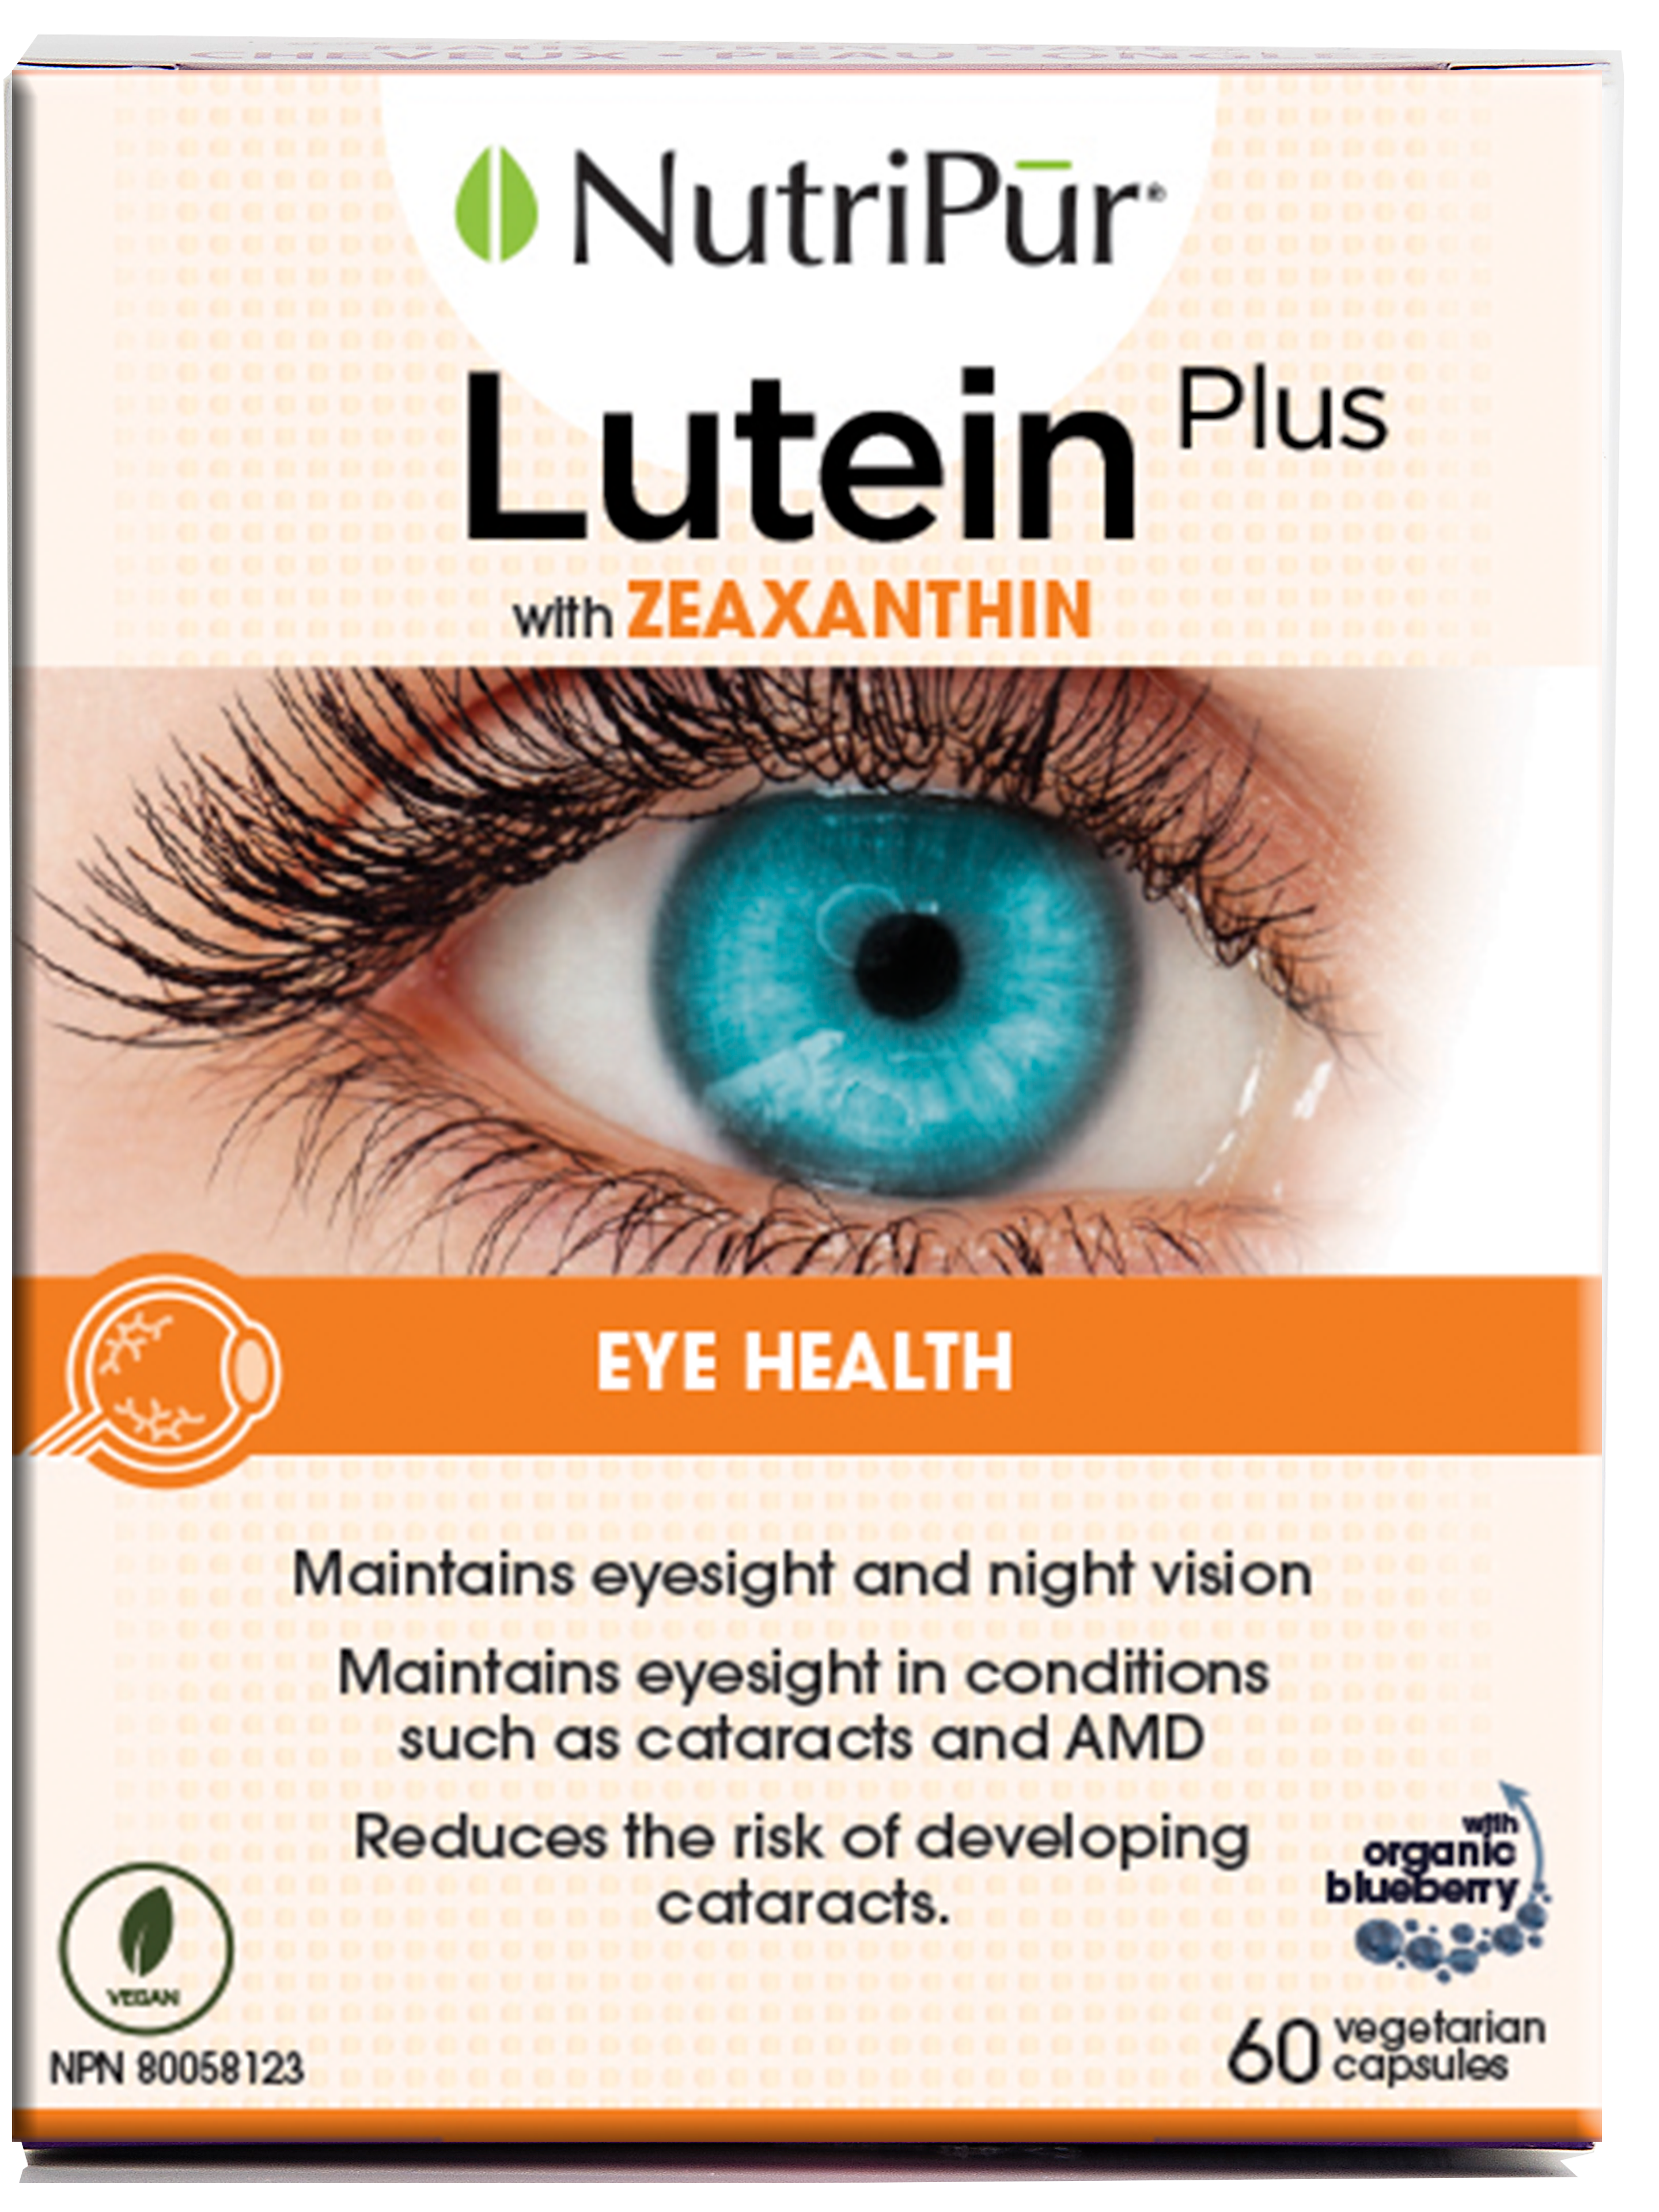 Lutein plus - Nutripur - with Zeaxanthin - eye health - eyesight - night vision - cataracts - AMD - Organic Blueberry